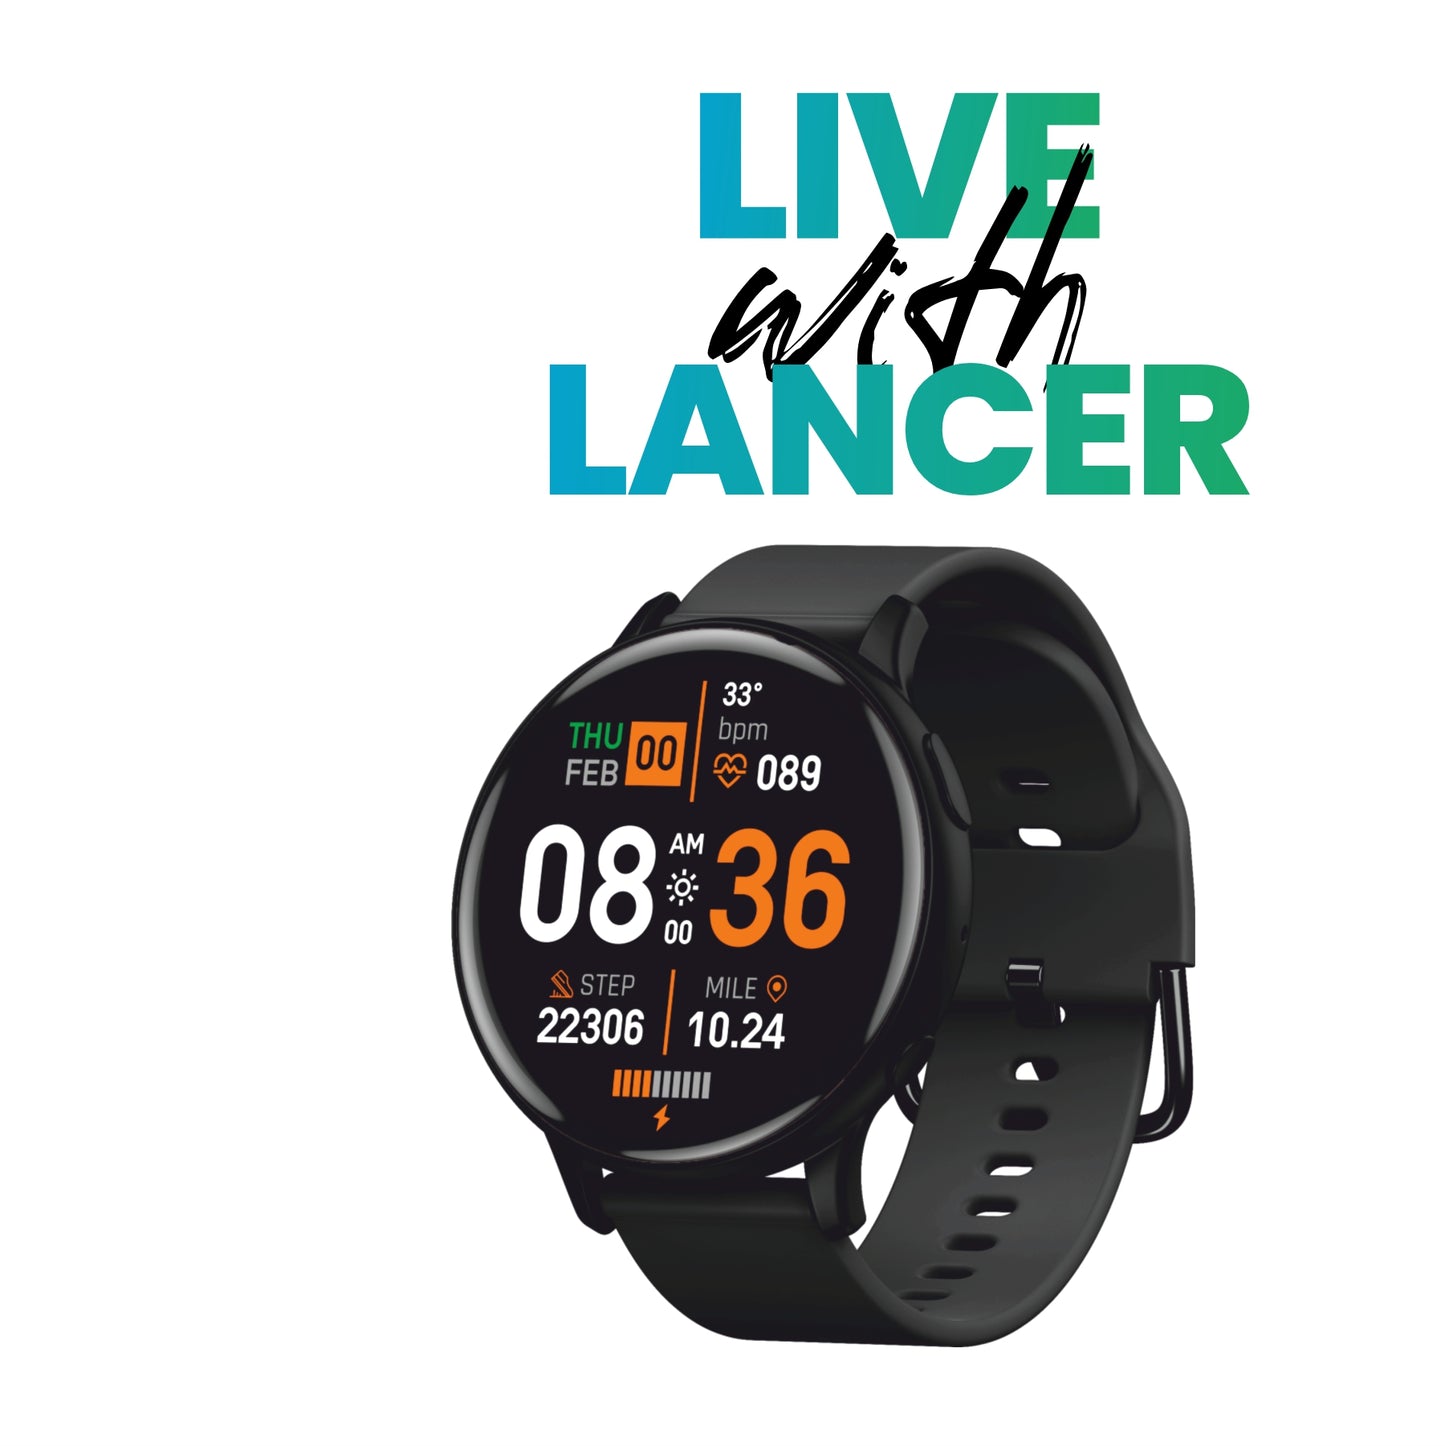 LYNE Lancer 1 Smart Watch 1.3" HD Screen, Bluetooth Calling & IP68 Water Resistance